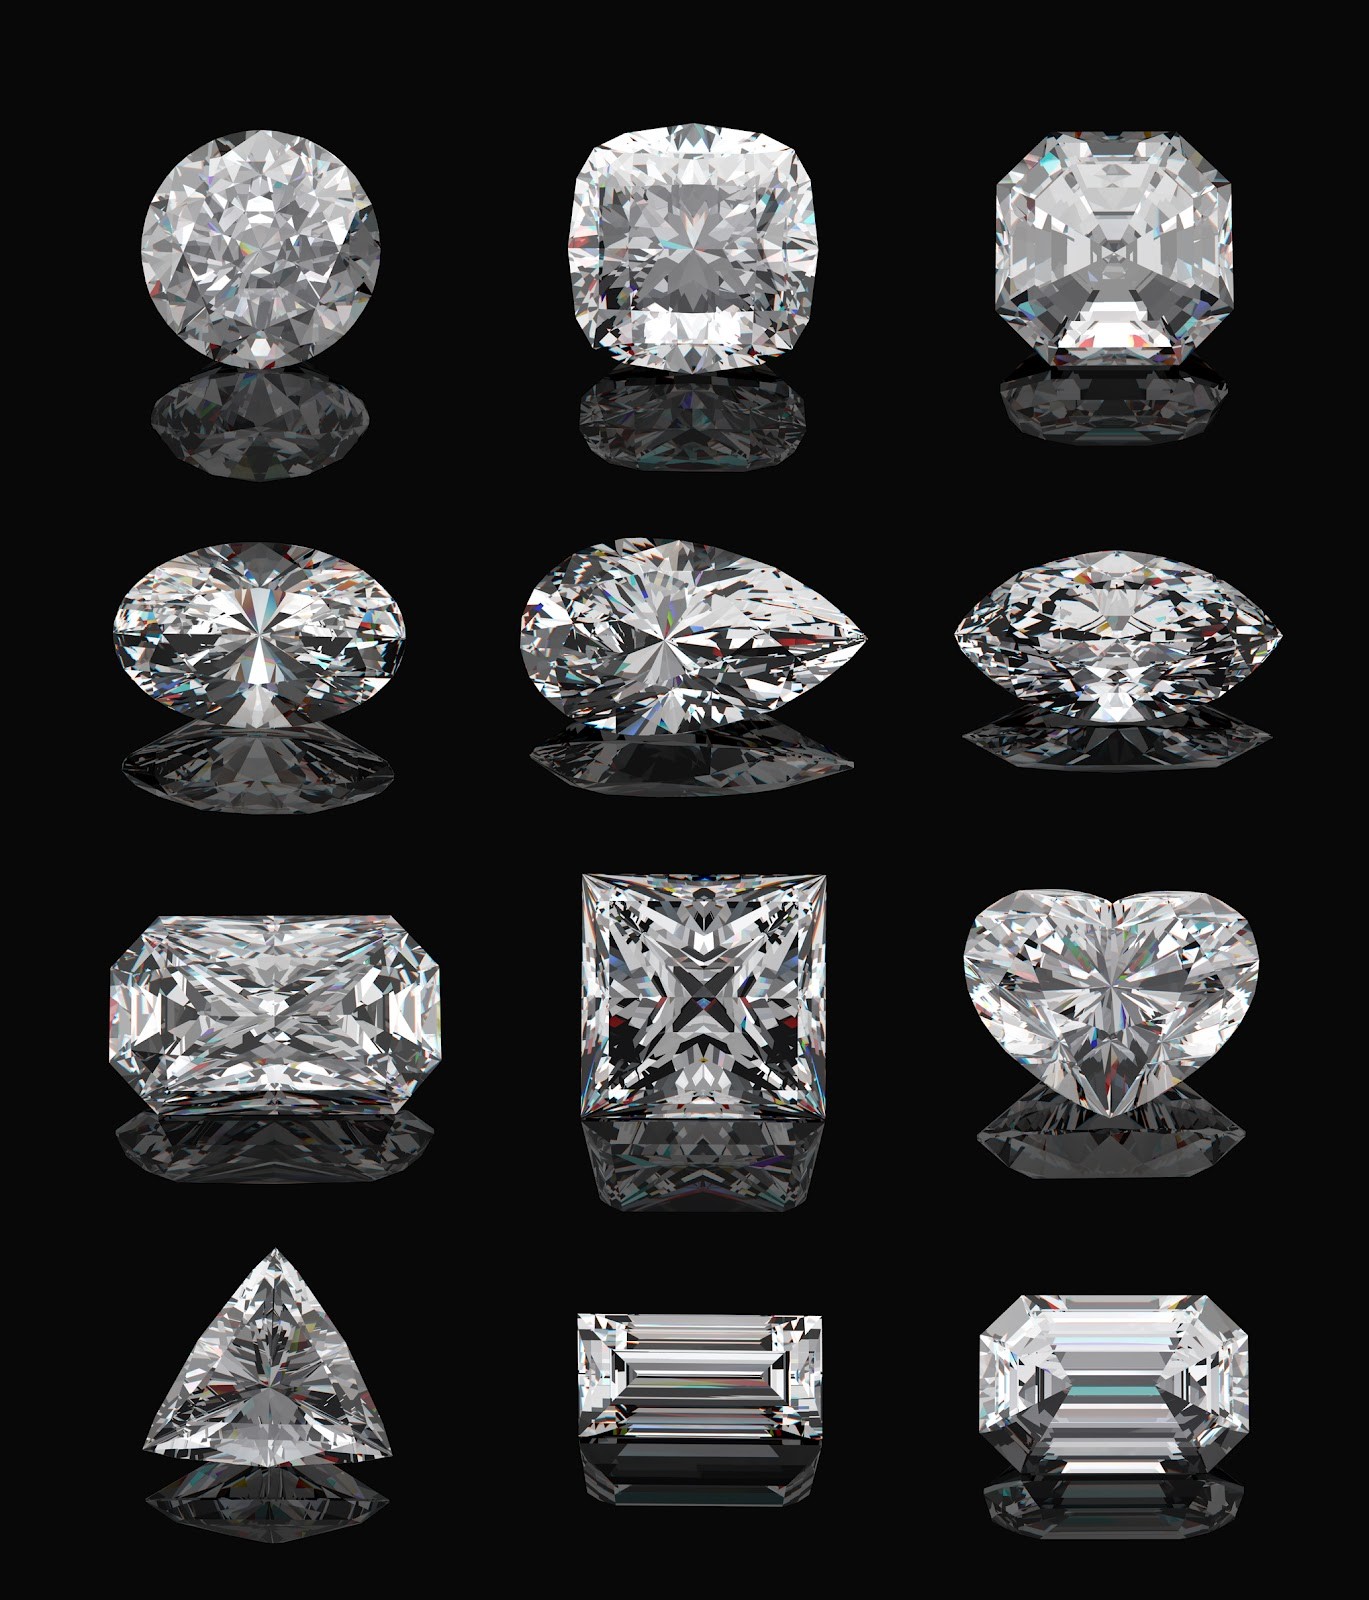 شکل الماس چیست؟